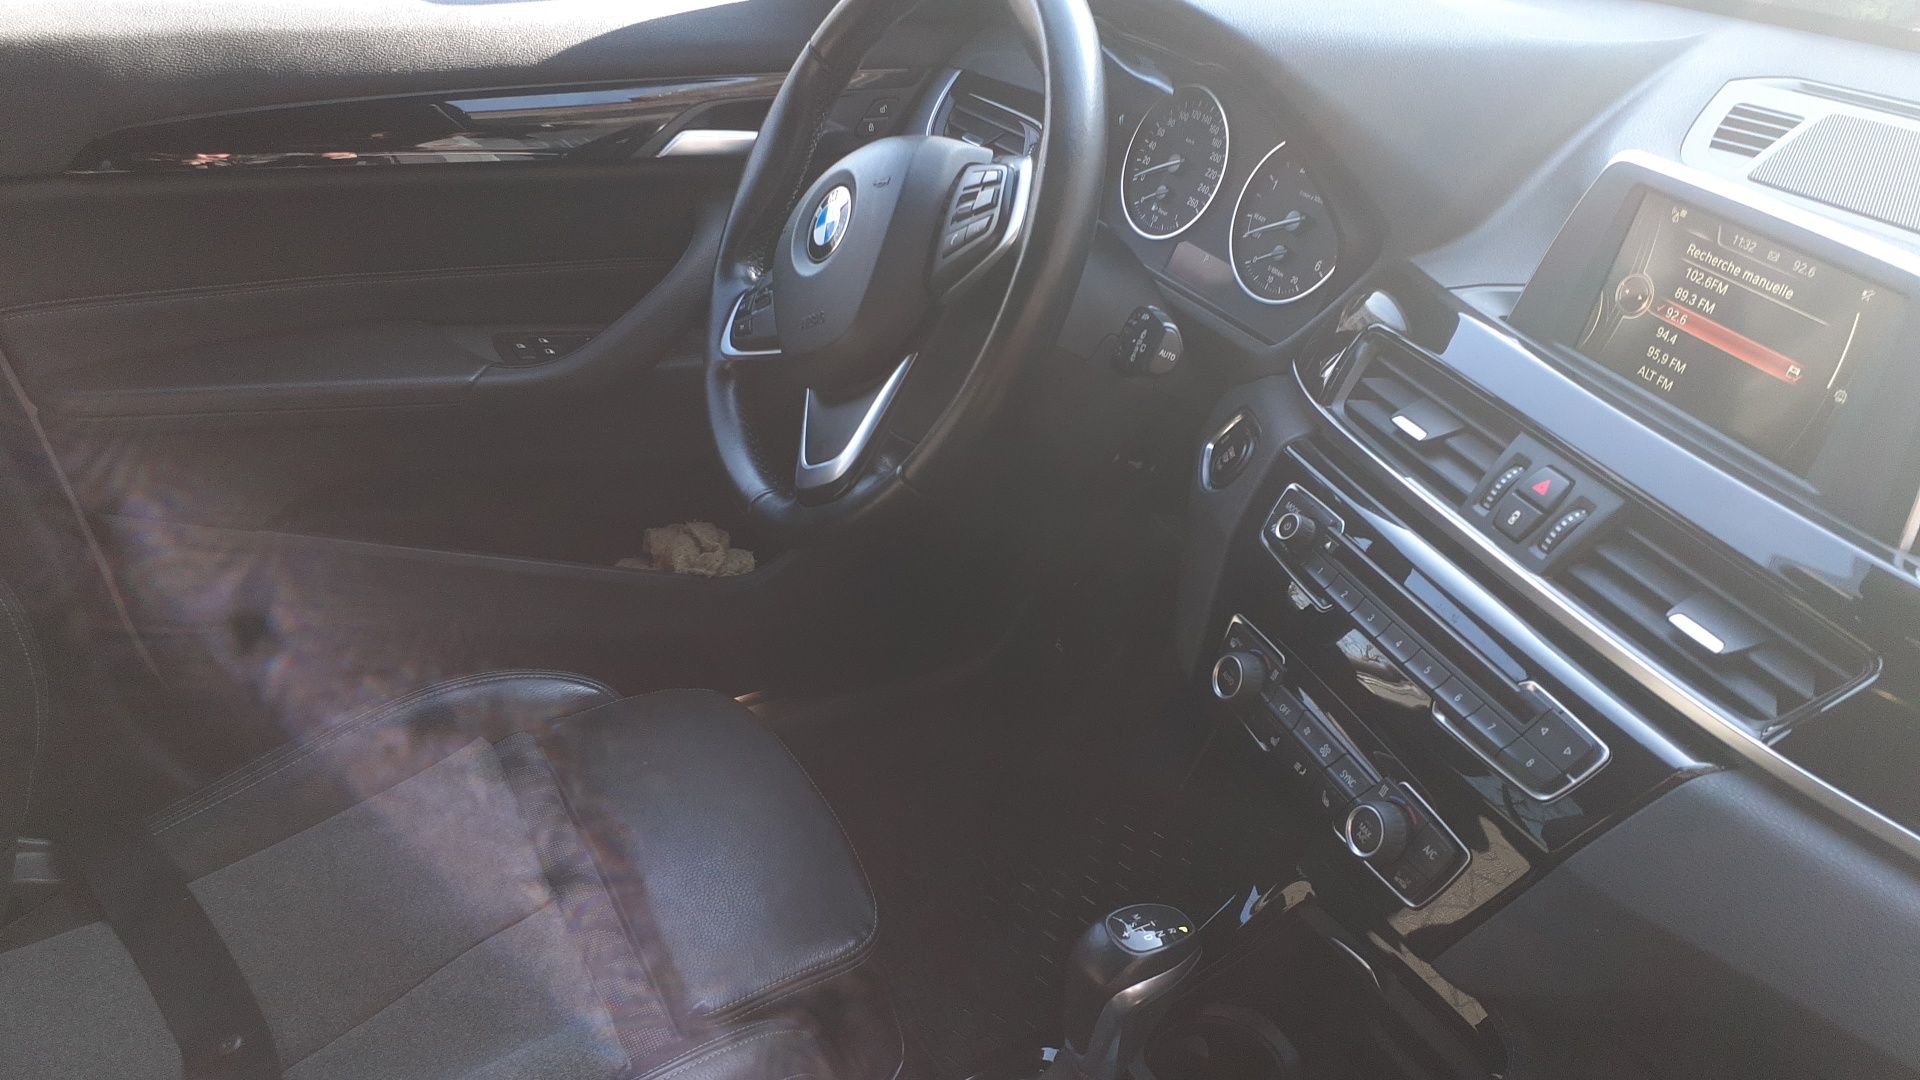 Vand BMW X1 2016automat, accept schimb cu ceva mai mic automat